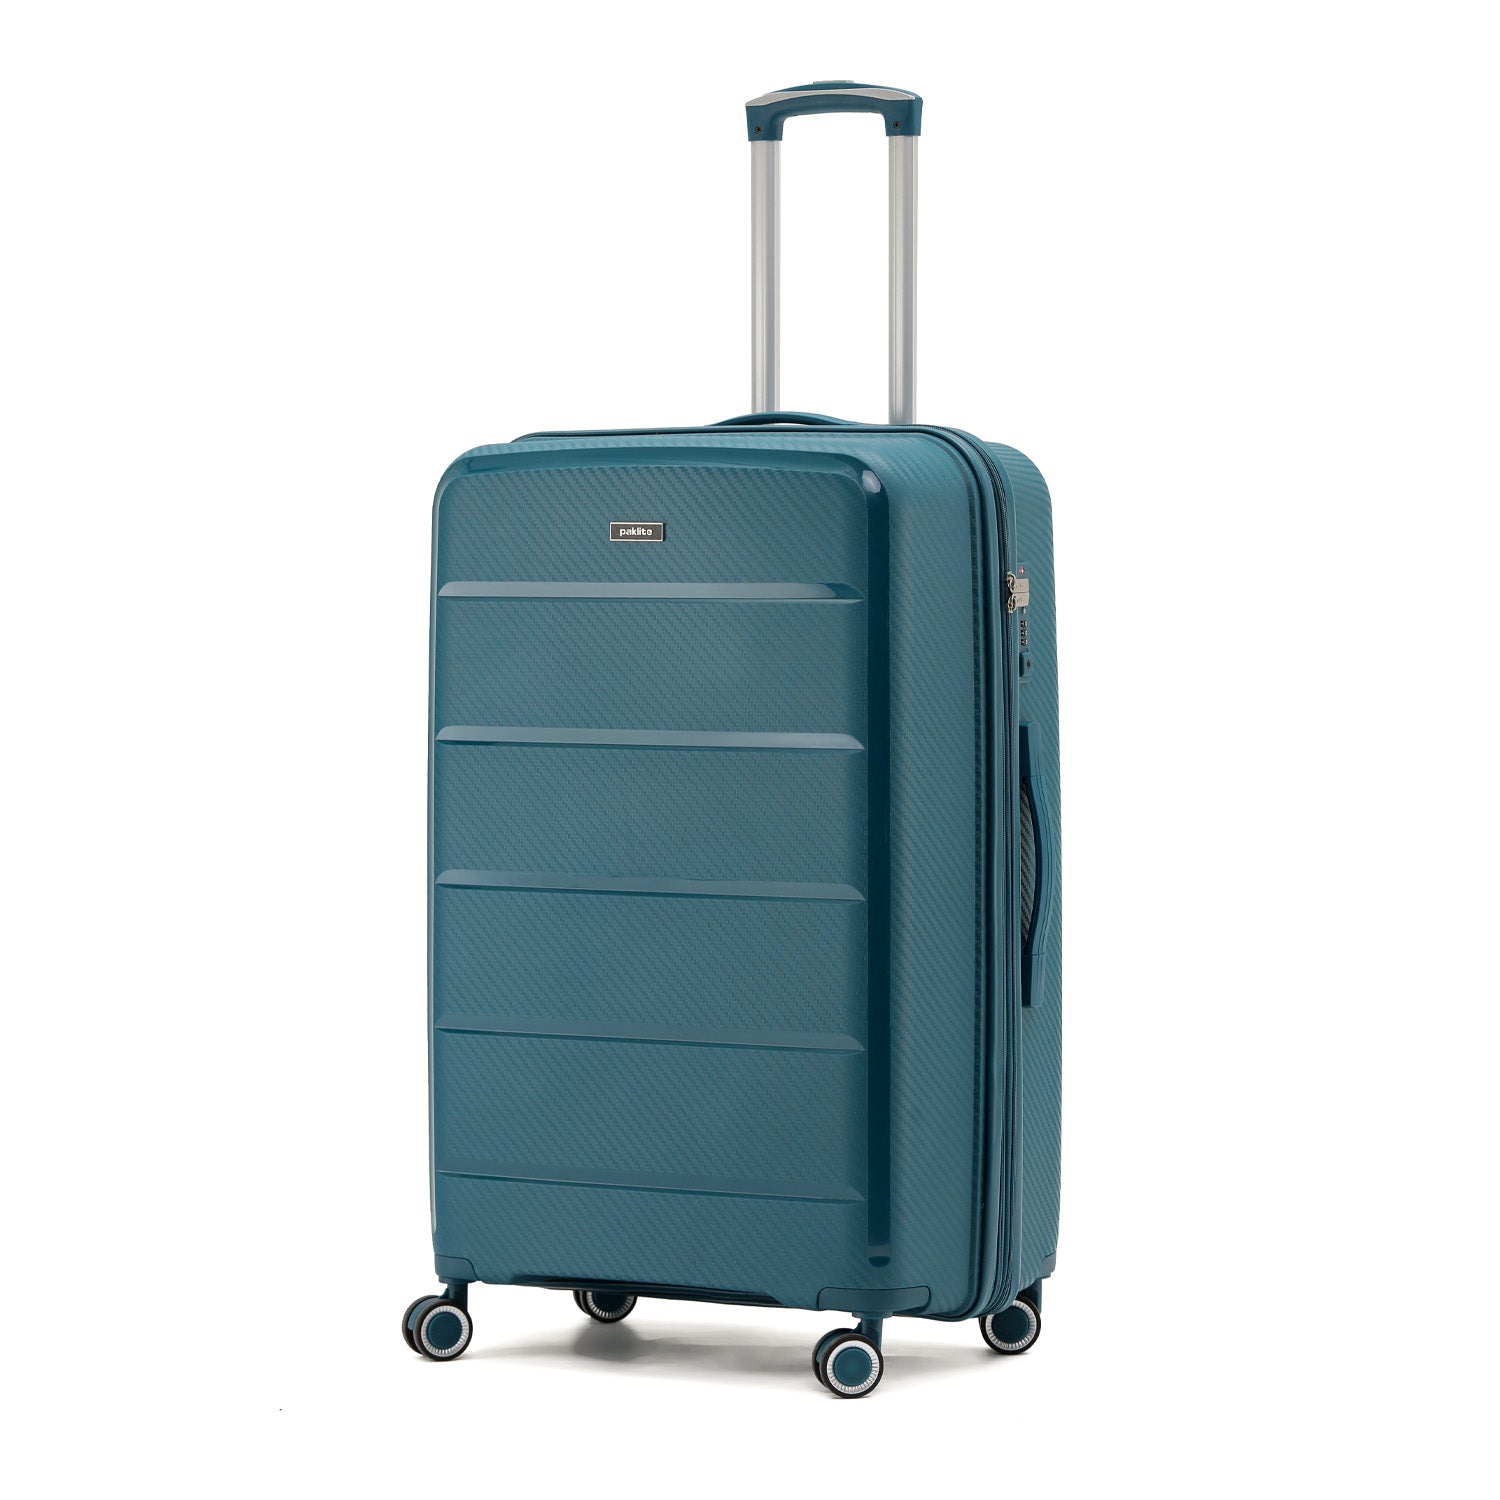 Paklite - PA7350 Large 75cm spinner suitcase - Blue-5